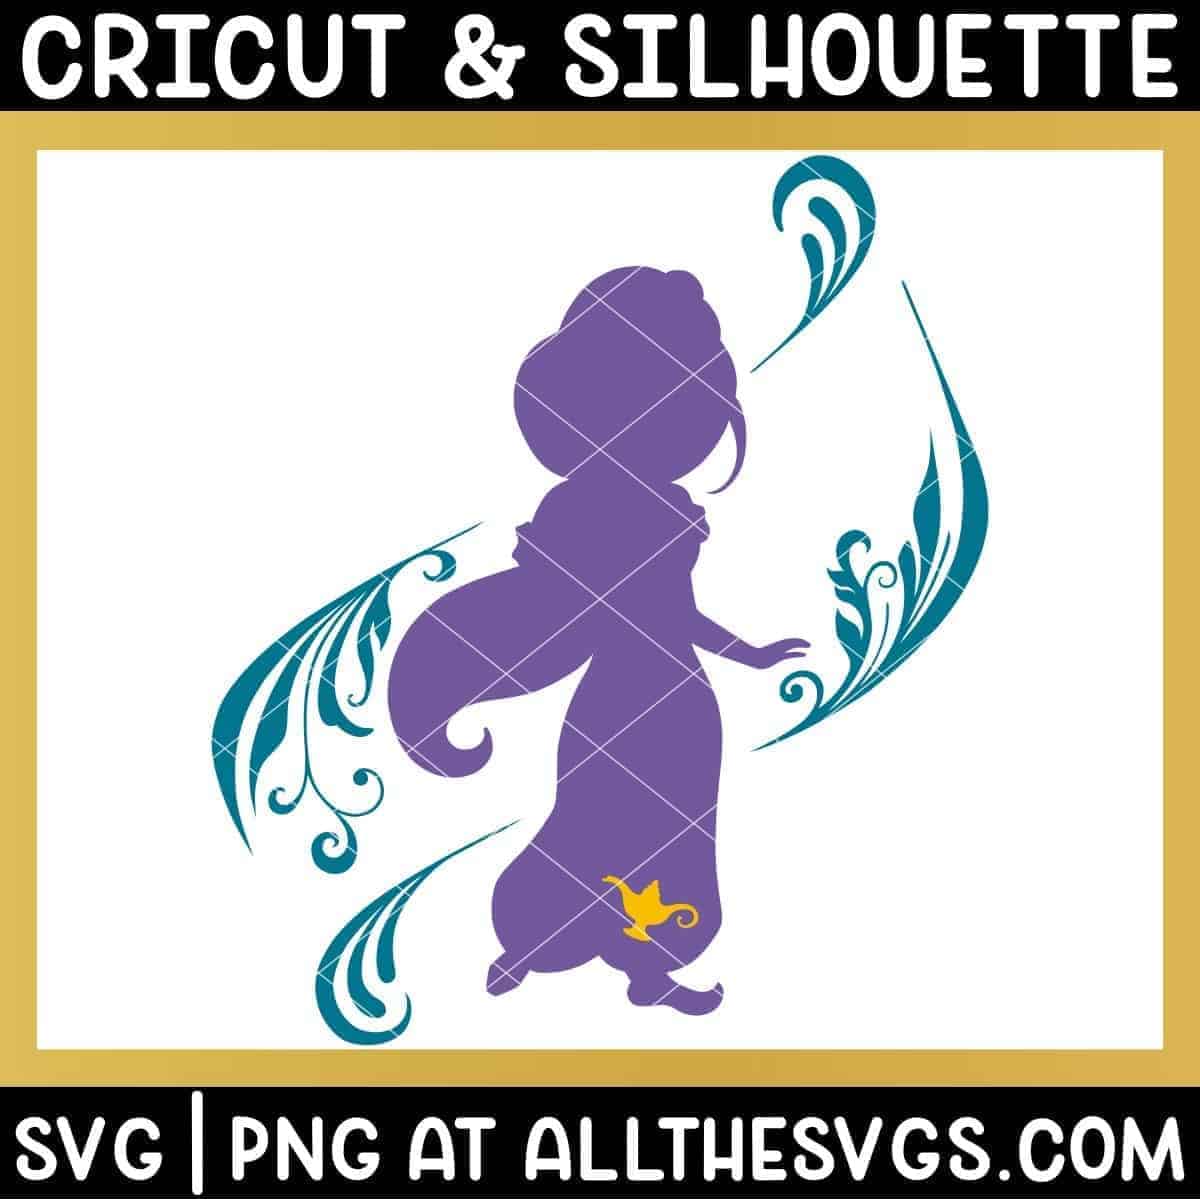 free jasmine svg file chibi anime style disney princess silhouette with swirl and genie lamp embellishment.